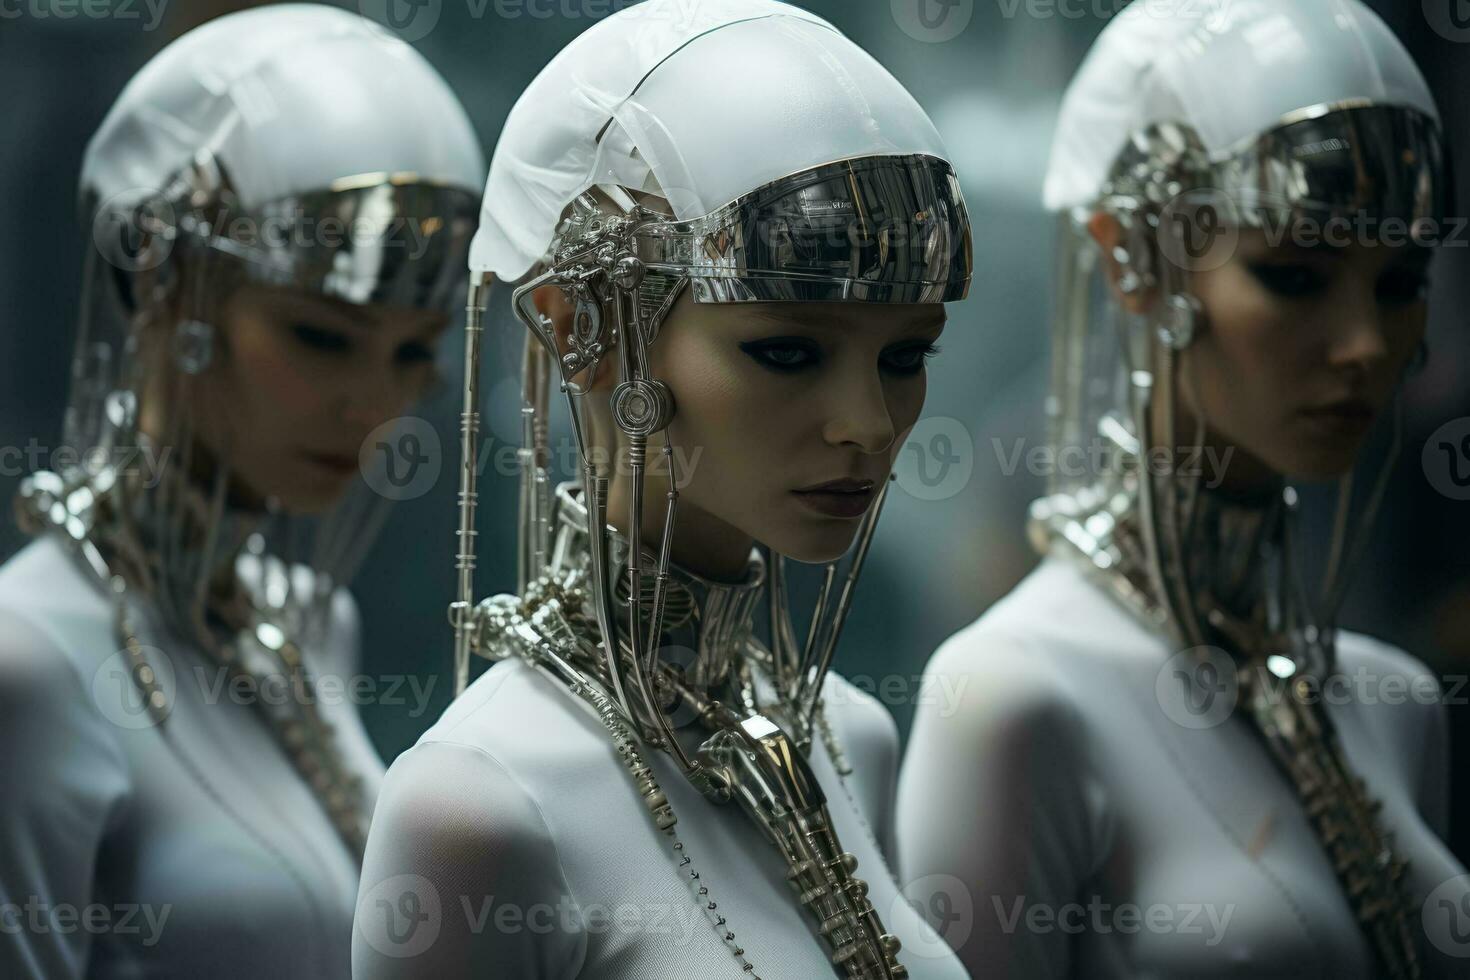 Cybernetic women dressed in minimalist metallic attire oozing avant-garde futurism in a monochromatic setting photo